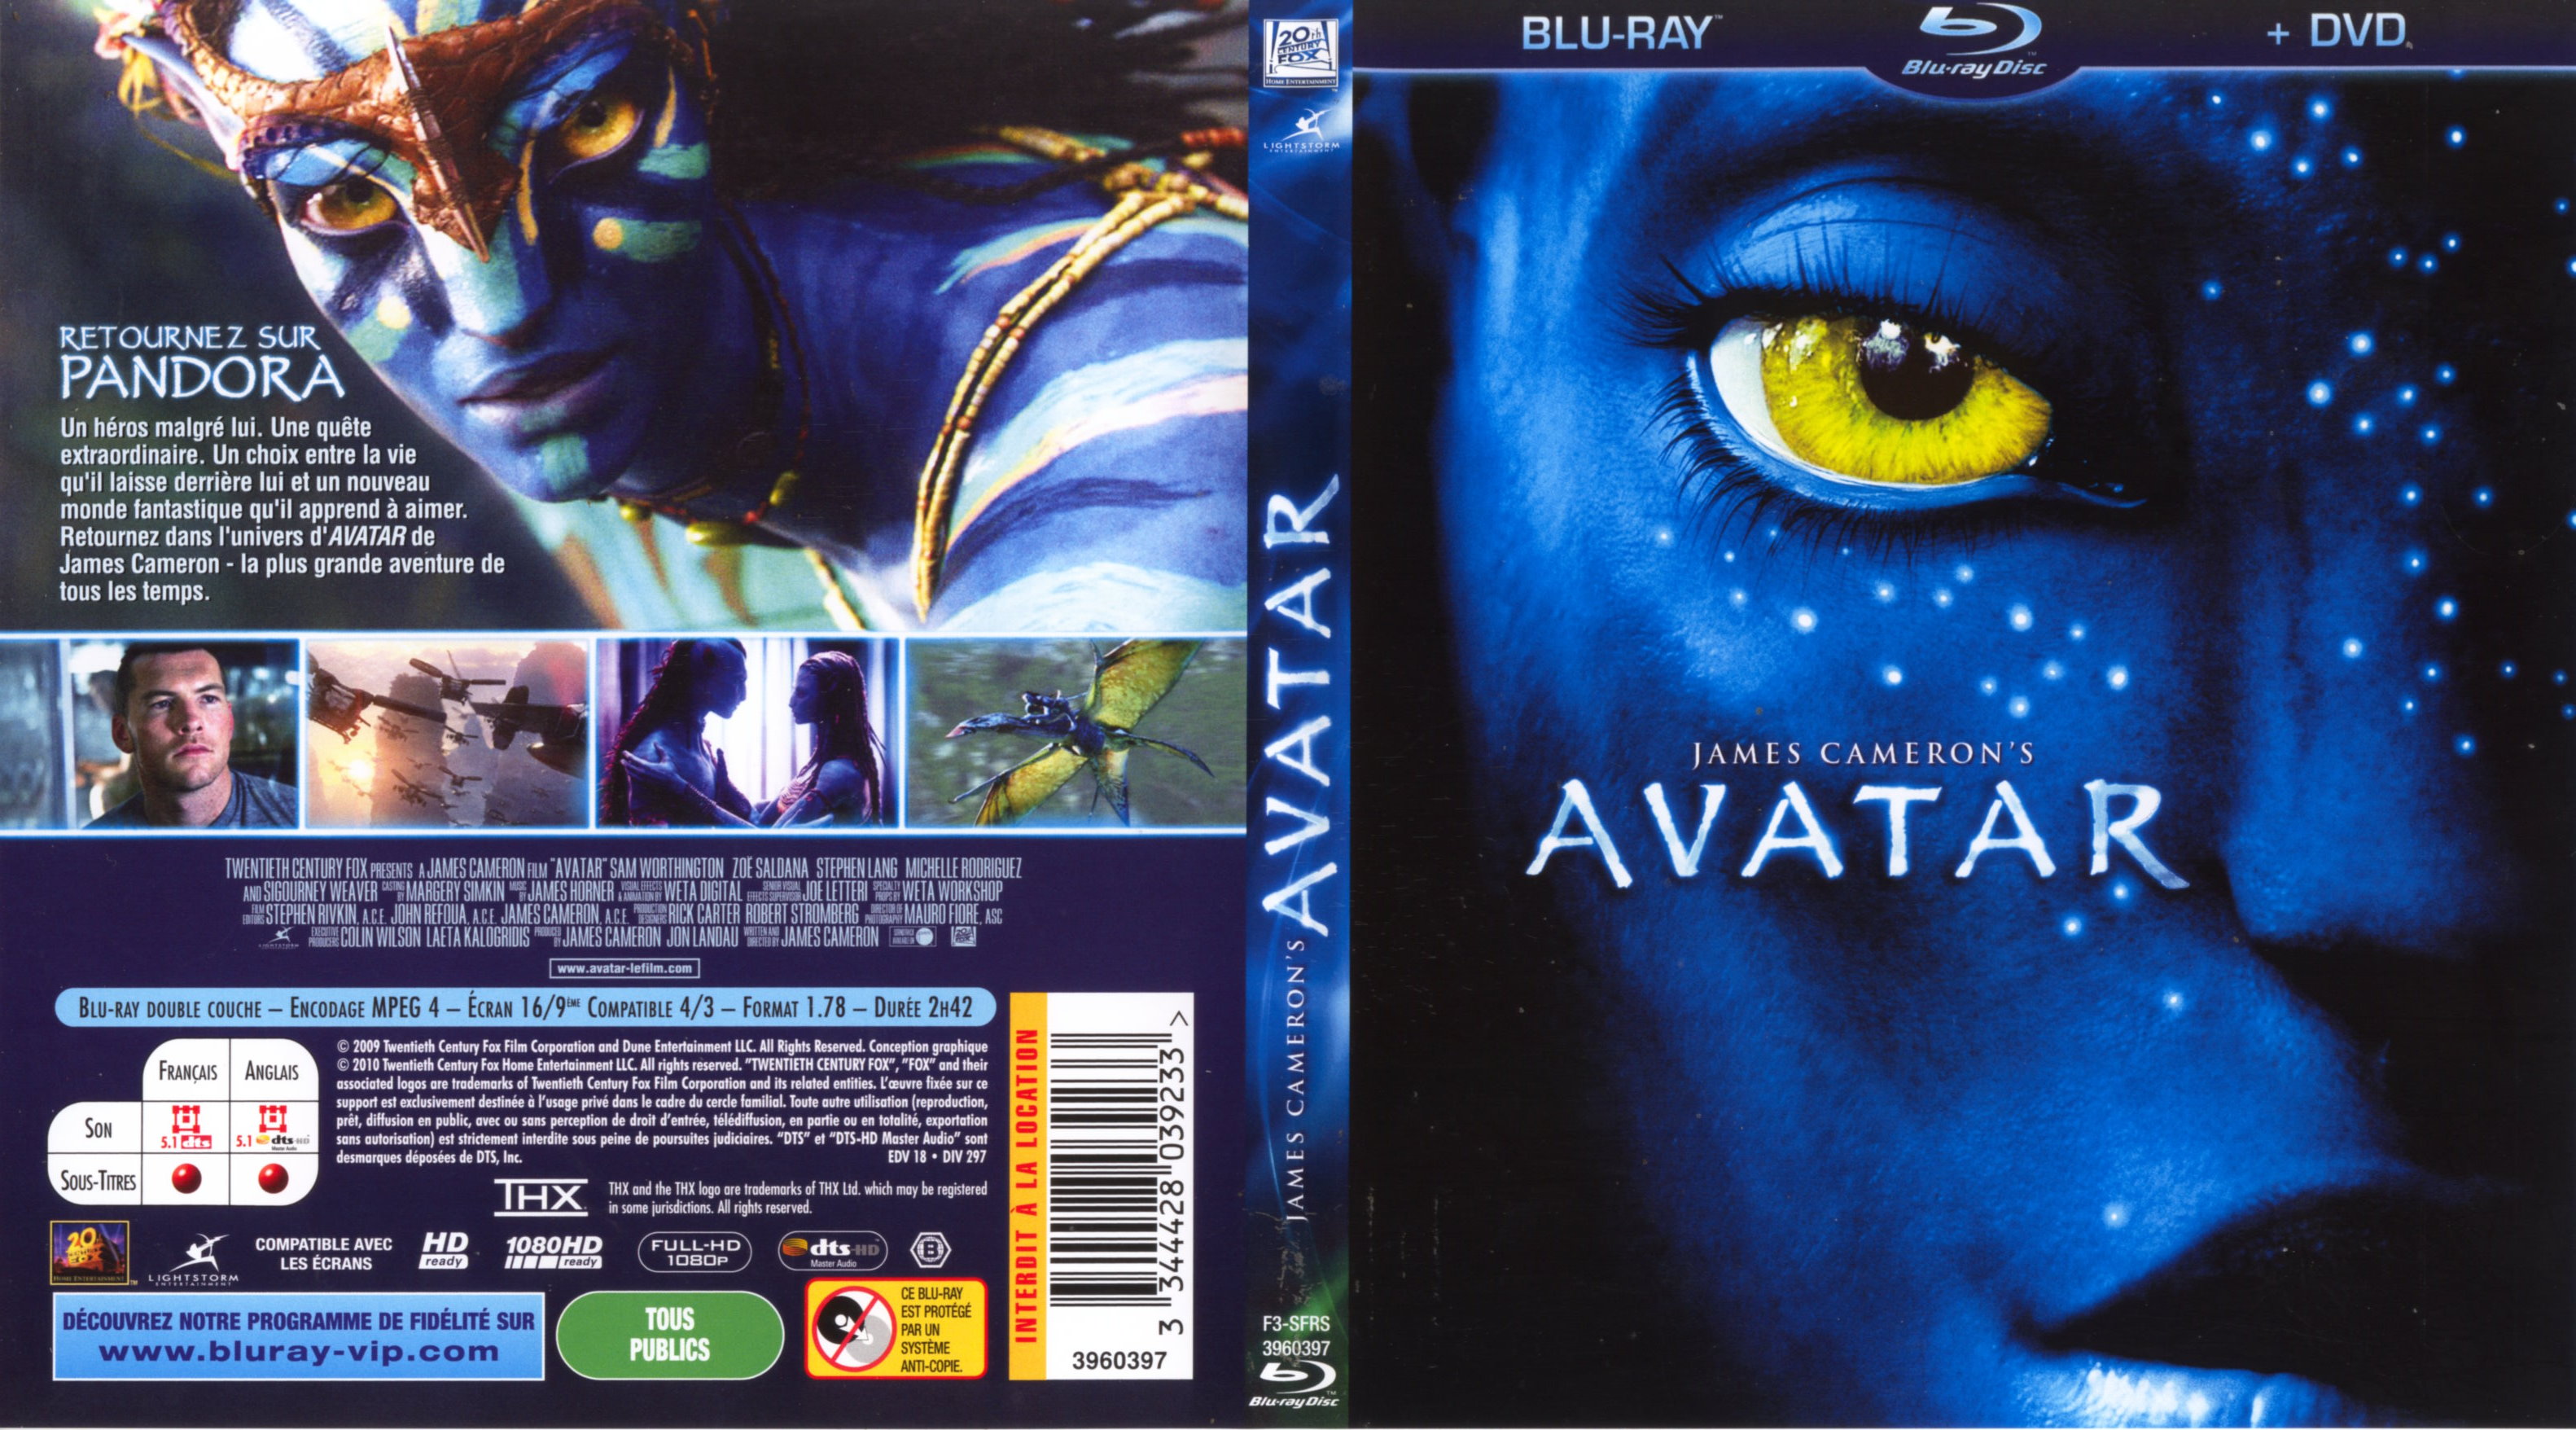 Jaquette DVD Avatar (BLU-RAY)